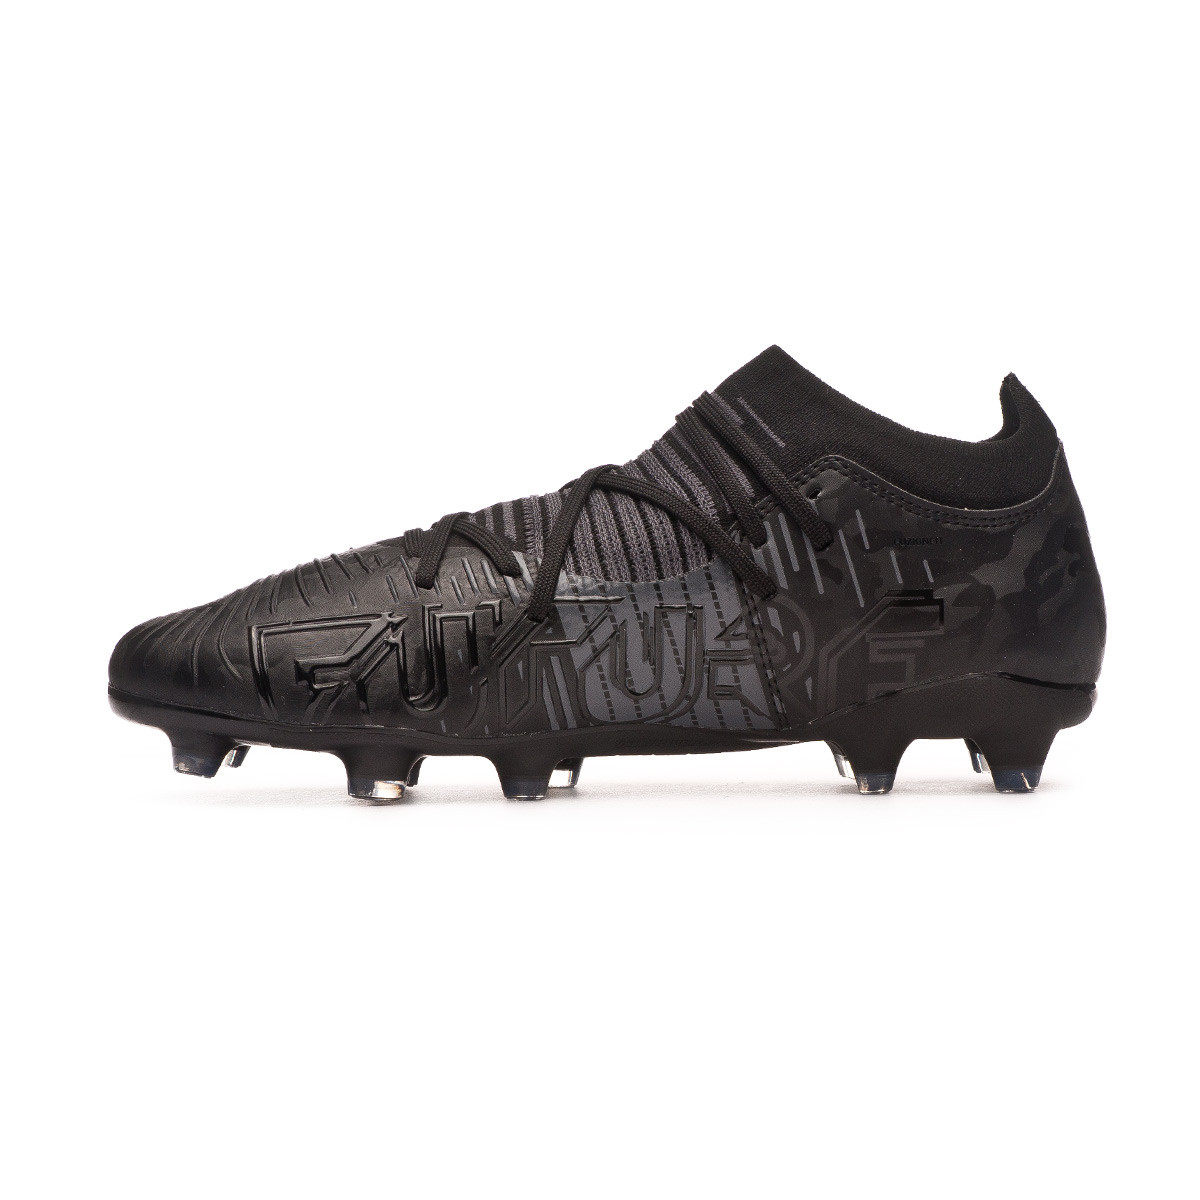 Football Boots Puma Future Z 3 1 Fg Ag Puma Black Asphalt Futbol Emotion